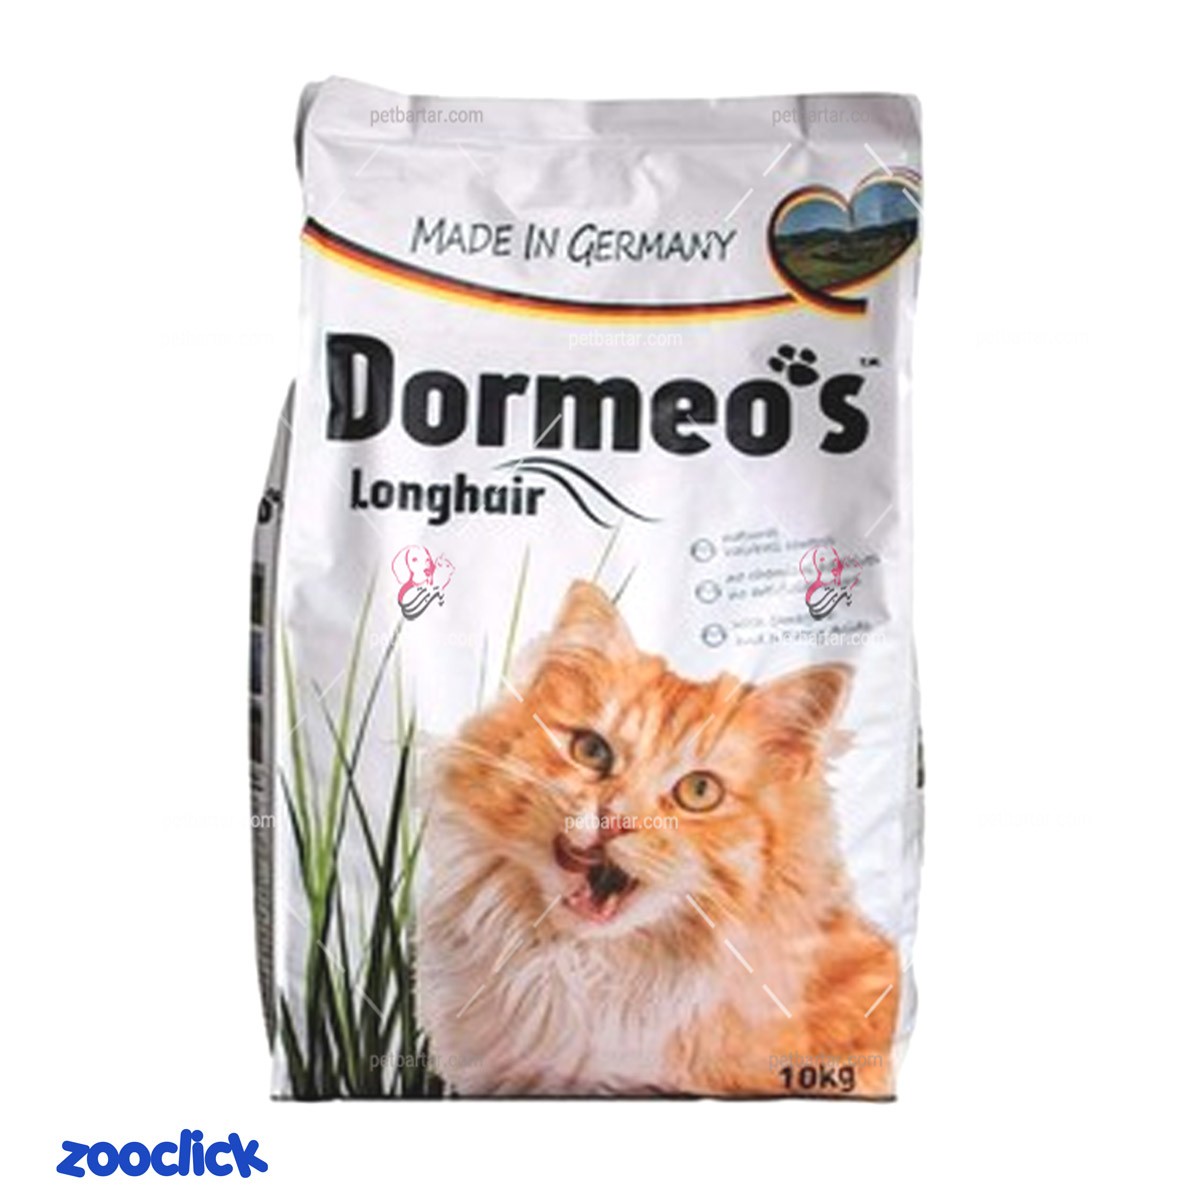 dormeo adult cat food with beef & chicken غذای خشک گربه بالغ دورمئو با طعم مرغ و گوشت